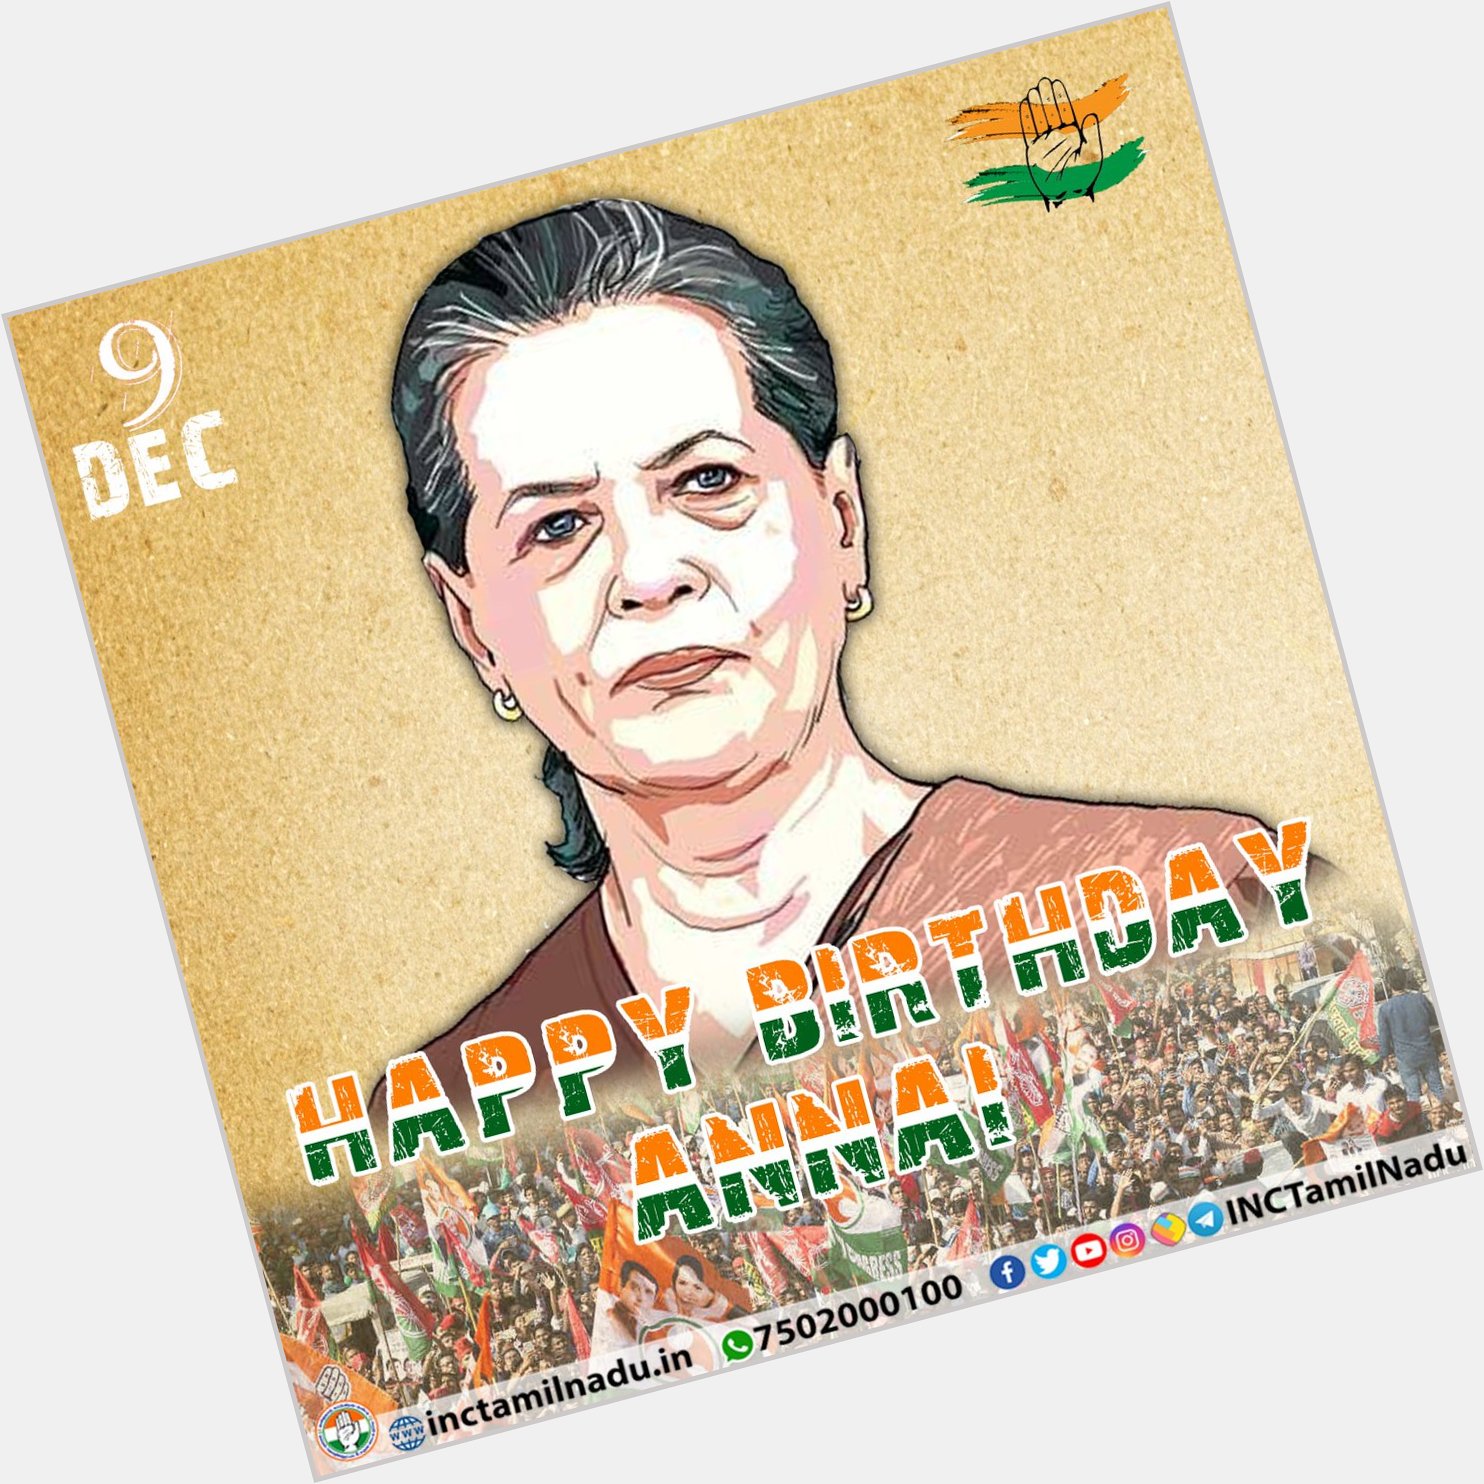  Happy Birthday Madam Sonia Gandhi  